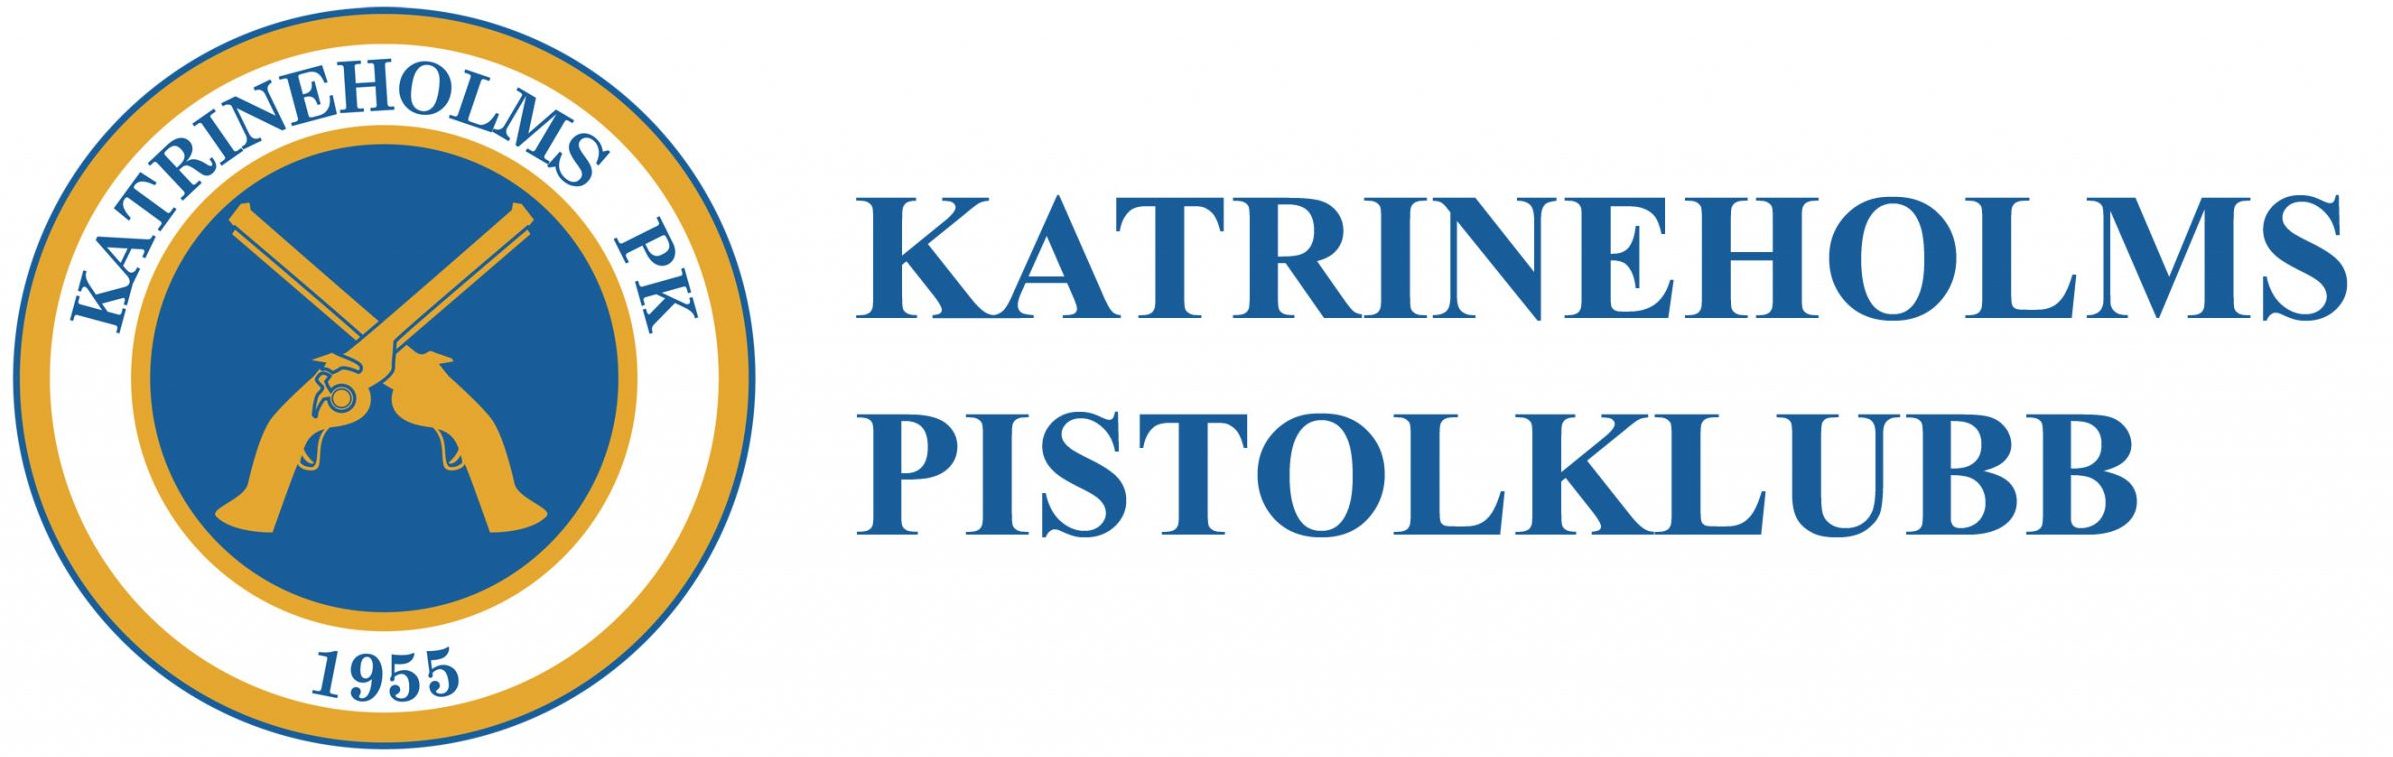 Katrineholms Pistolklubb